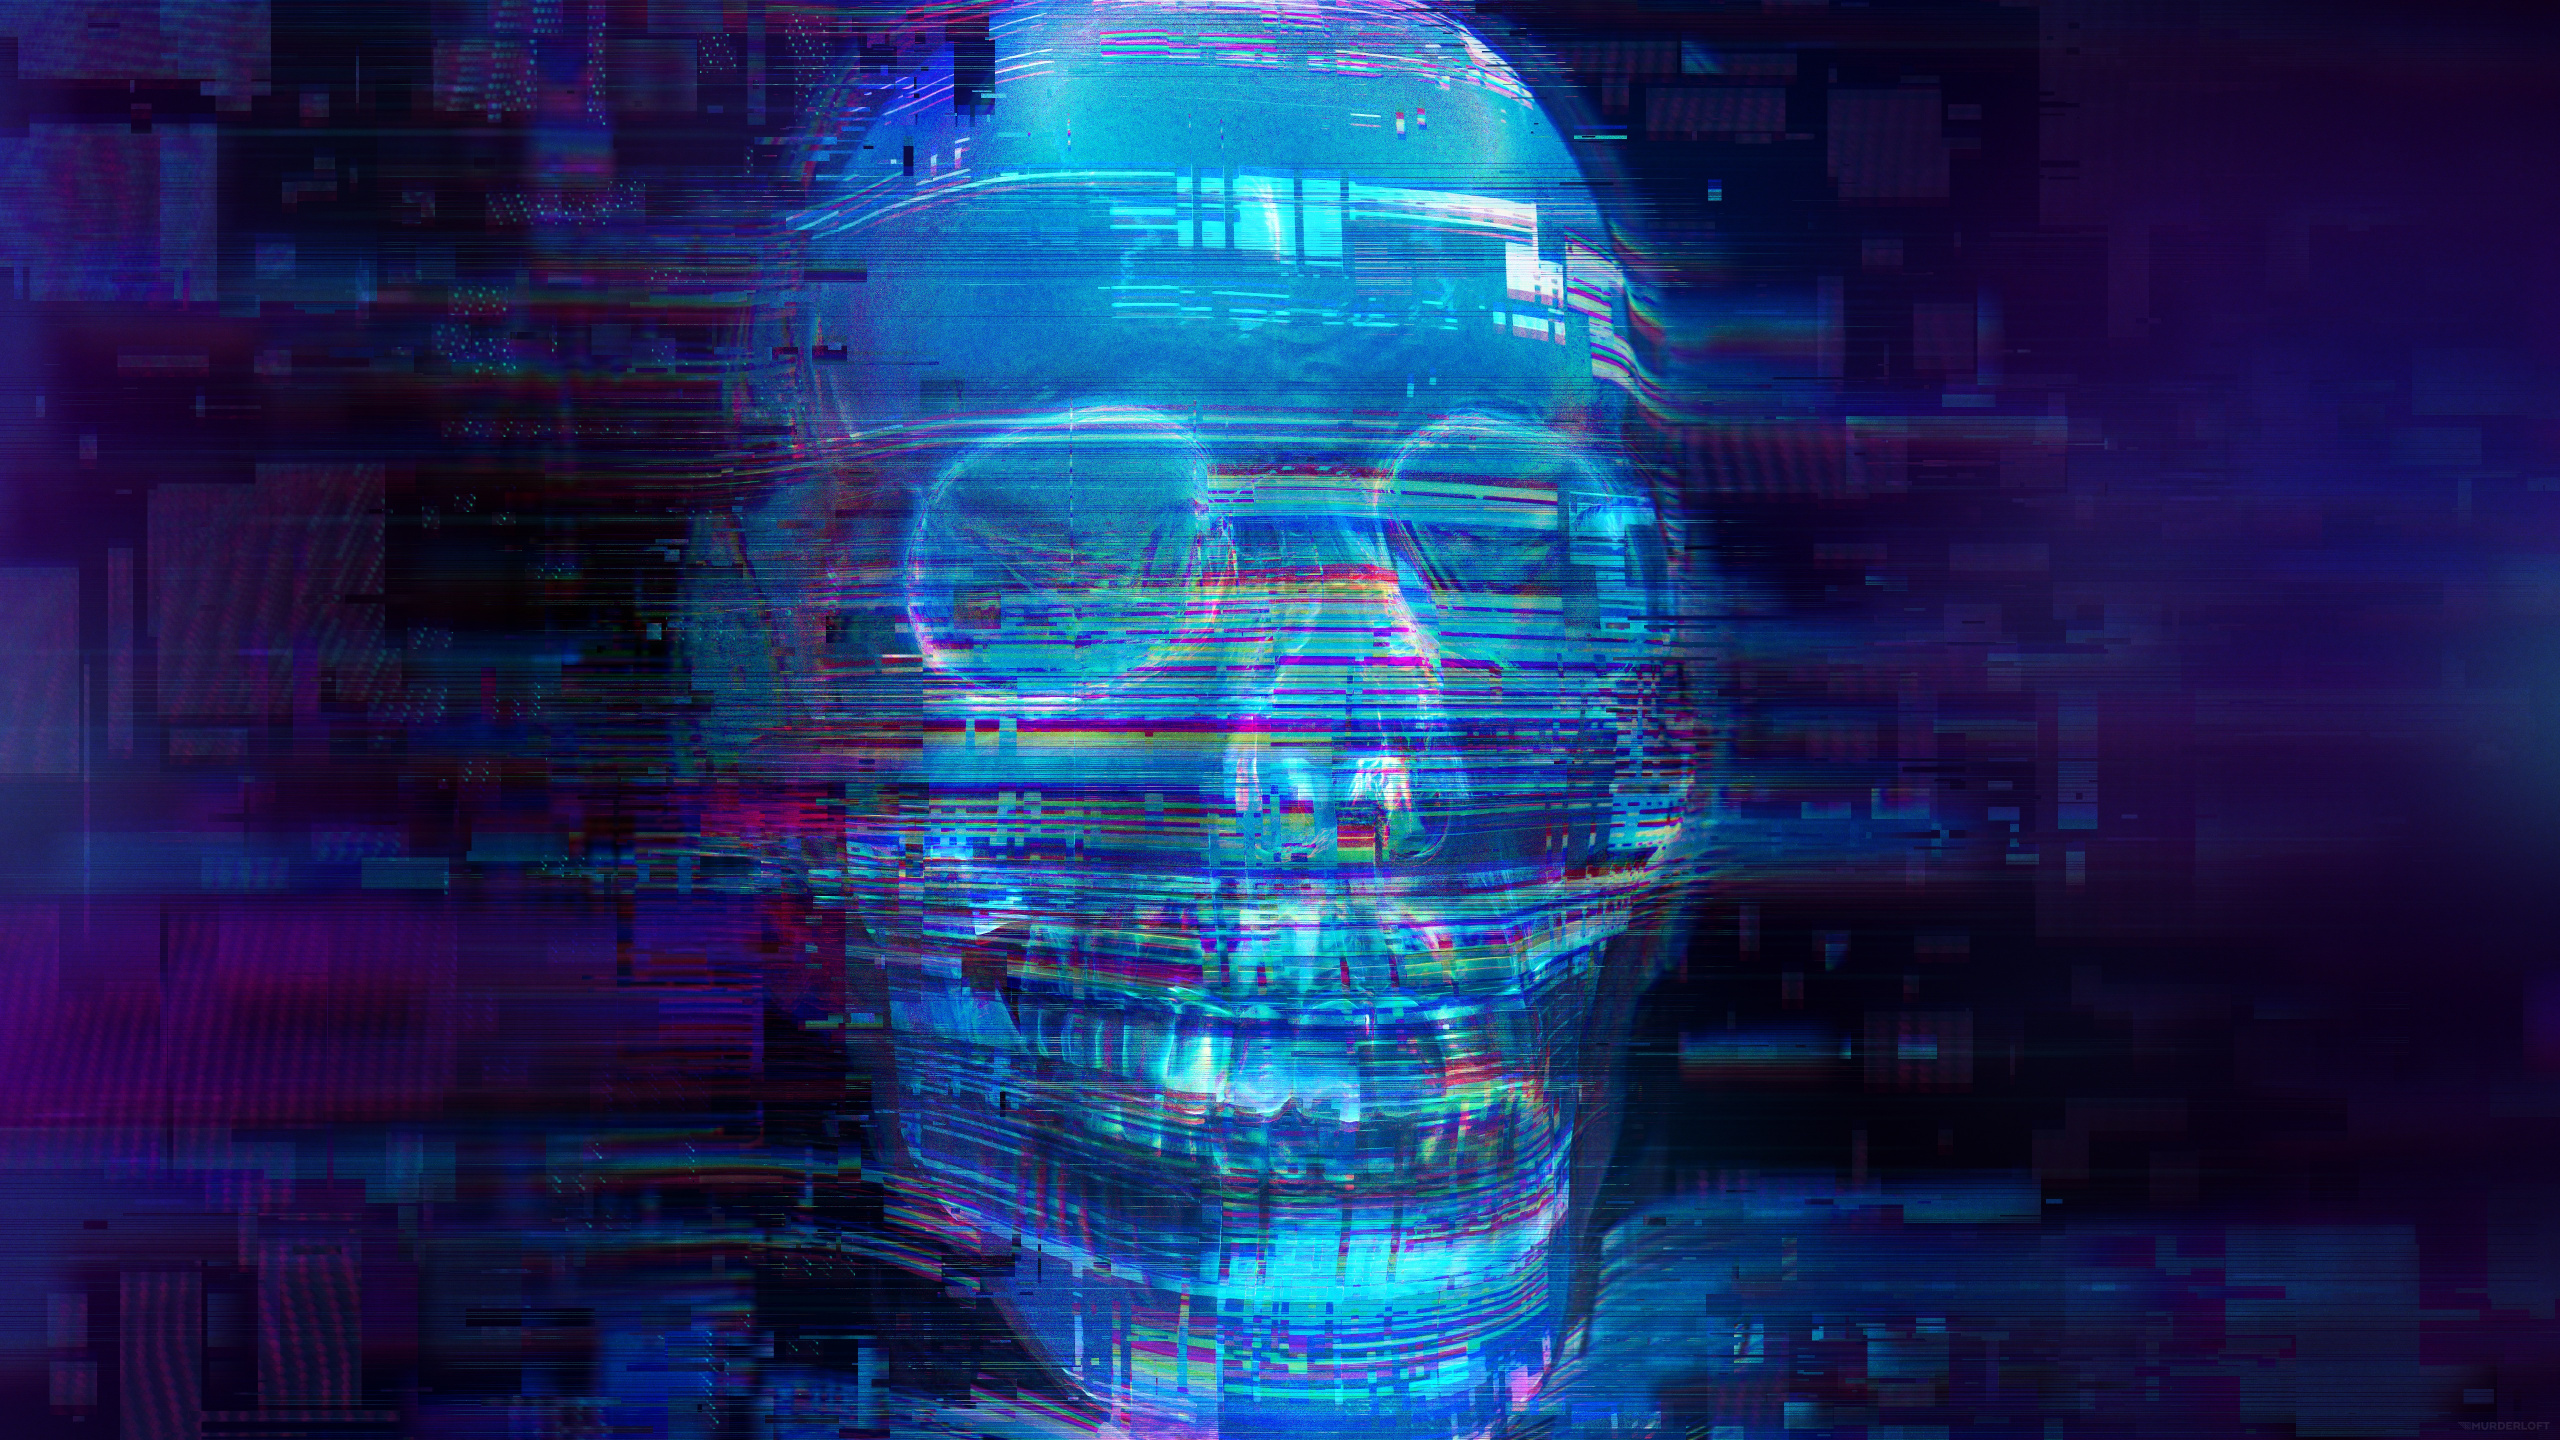 Download Skull, fear, glitch art, neon blue wallpaper, 2560x Dual Wide, Widescreen 16: Widescreen